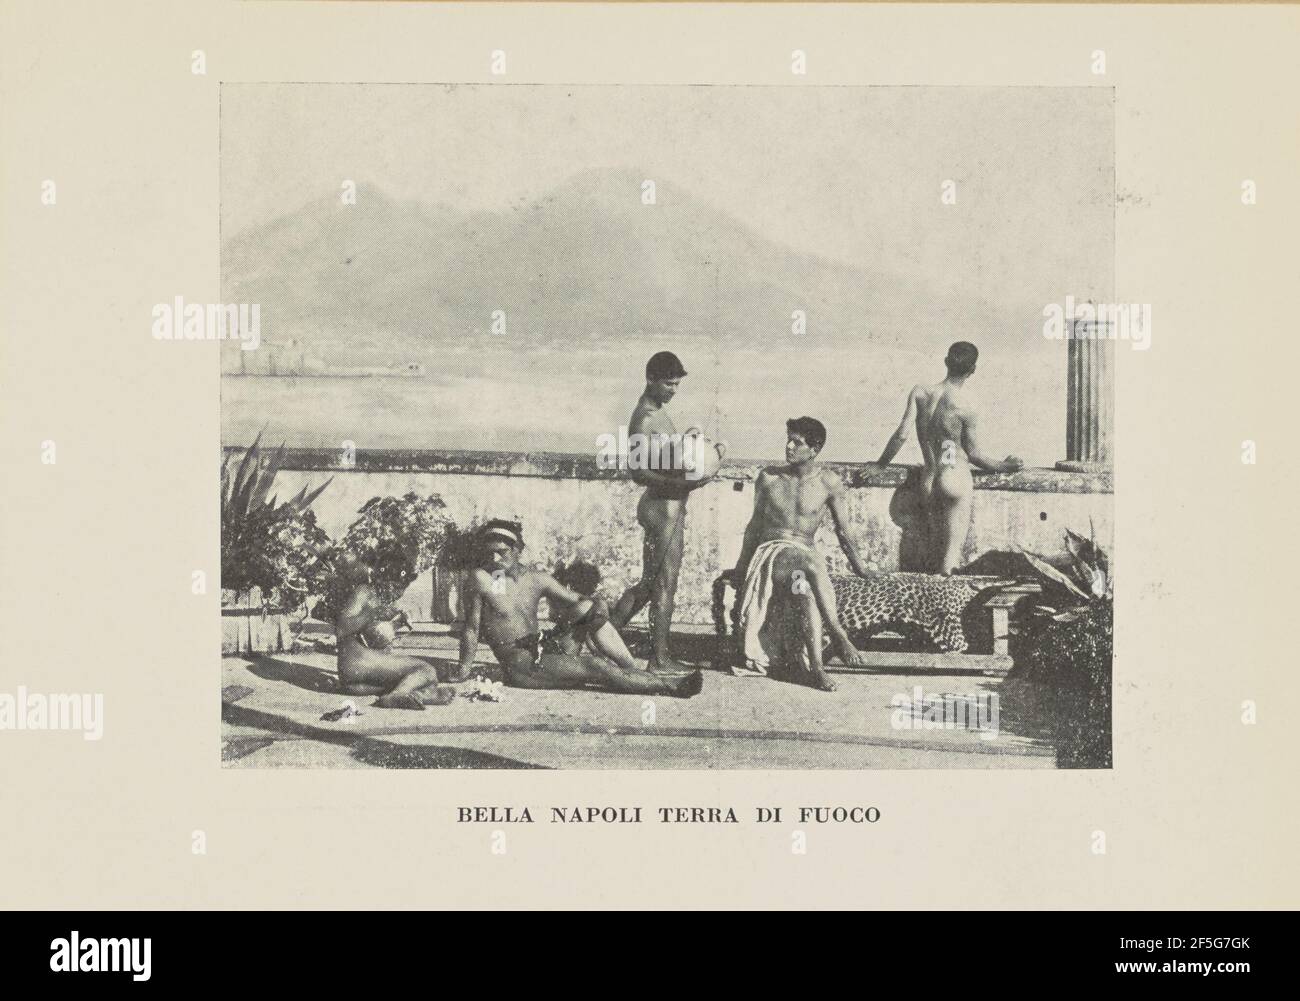 Bella Napoli, Terra di Fuoco. Baron Wilhelm von Gloeden (German, 1856 - 1931) Stock Photo